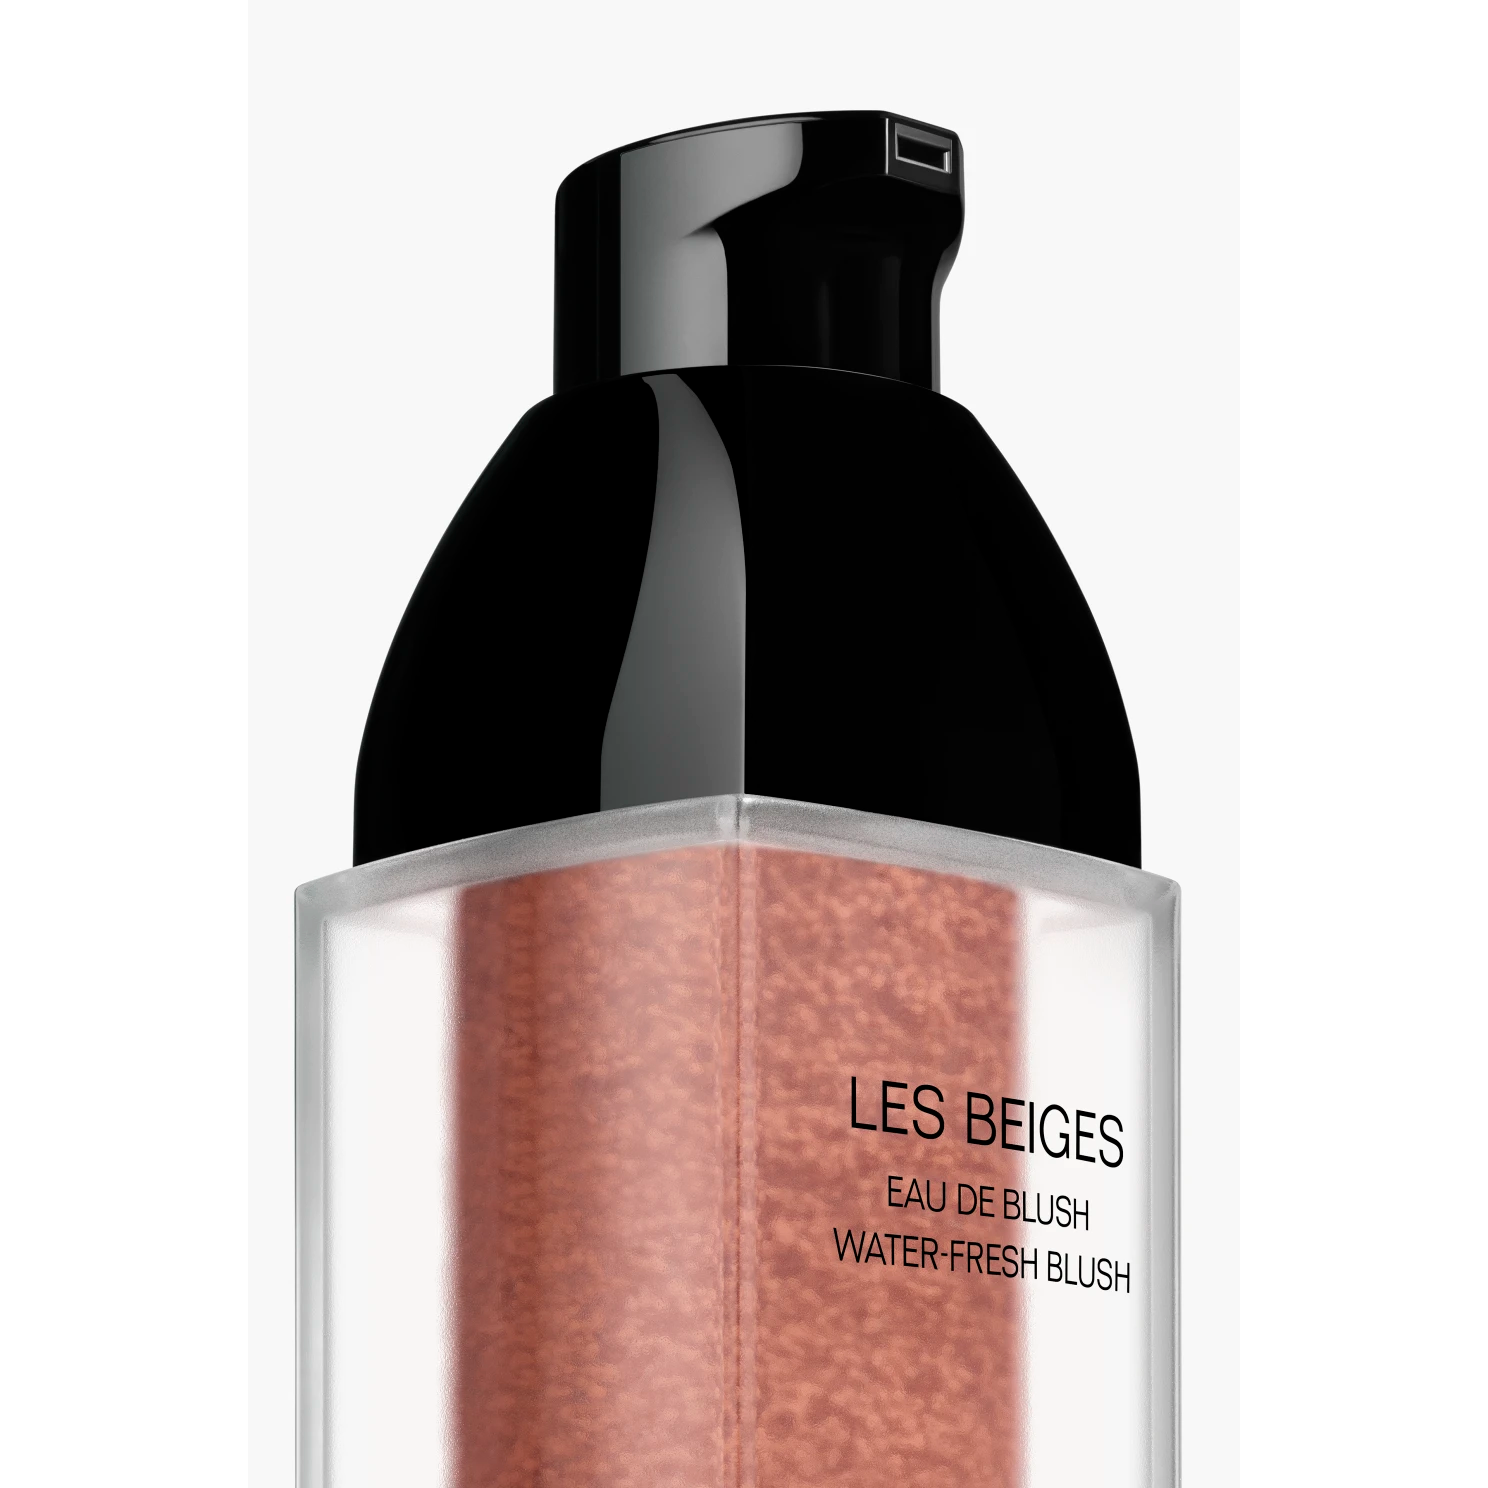 Chanel - Les Beiges Water-Fresh Blush